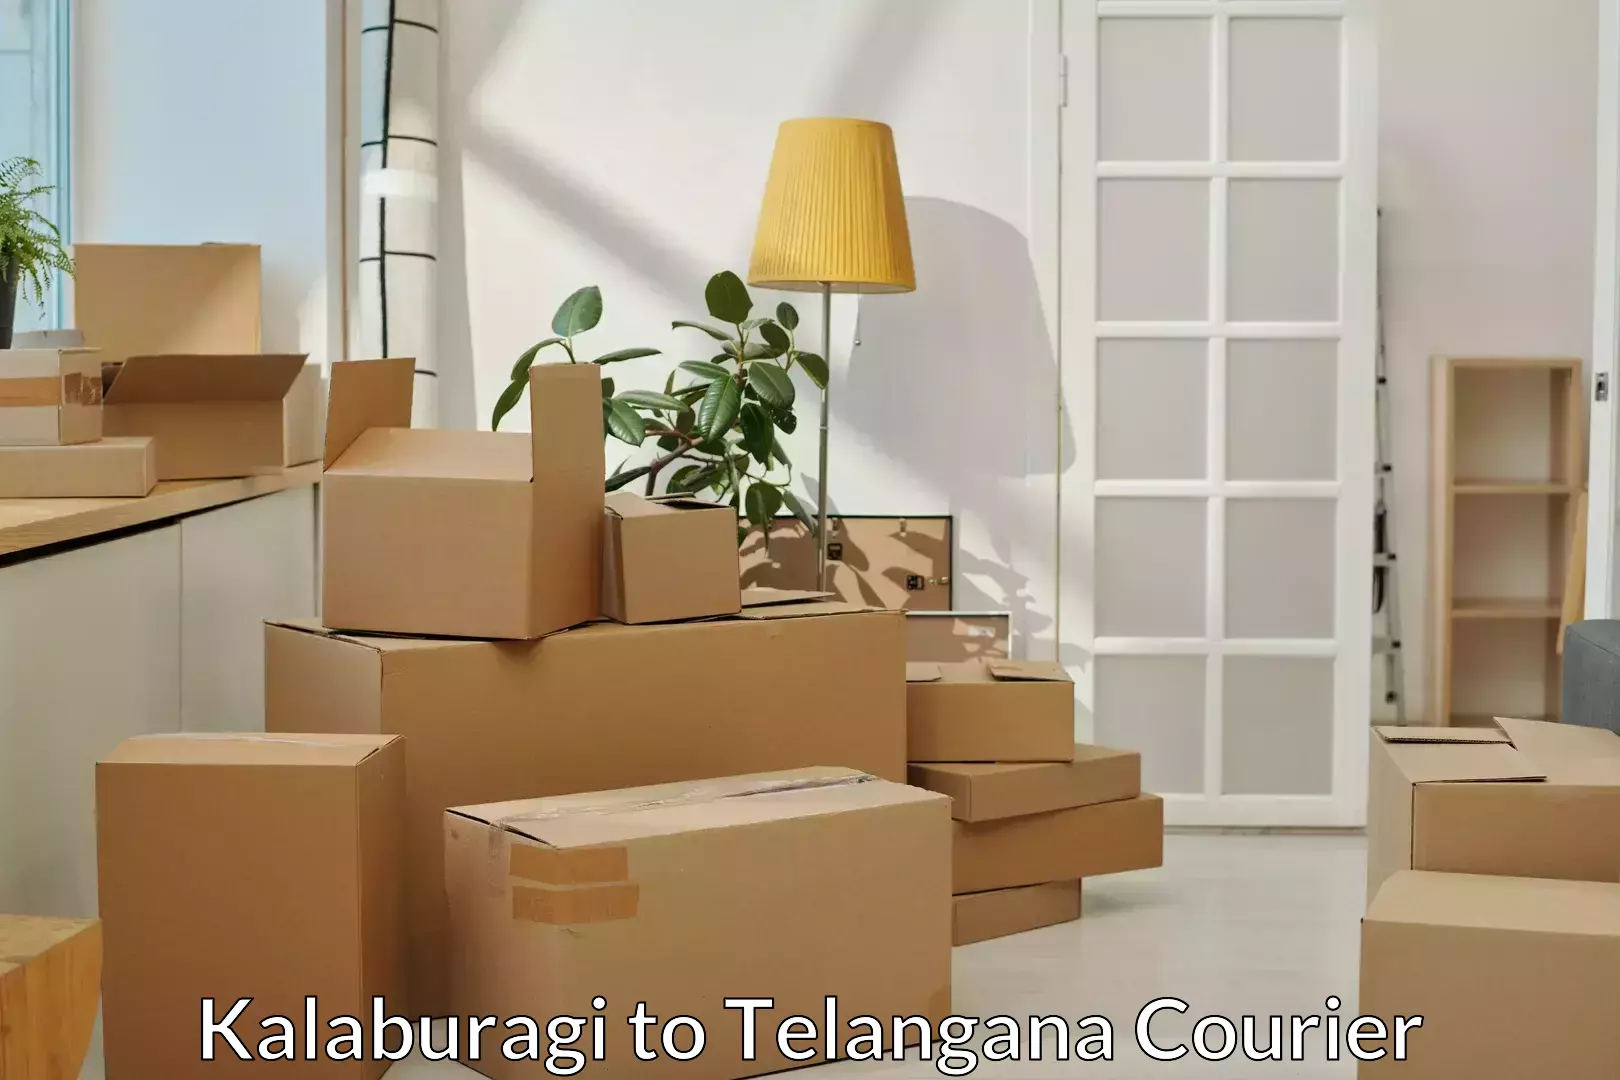 Moving and packing experts Kalaburagi to Telangana